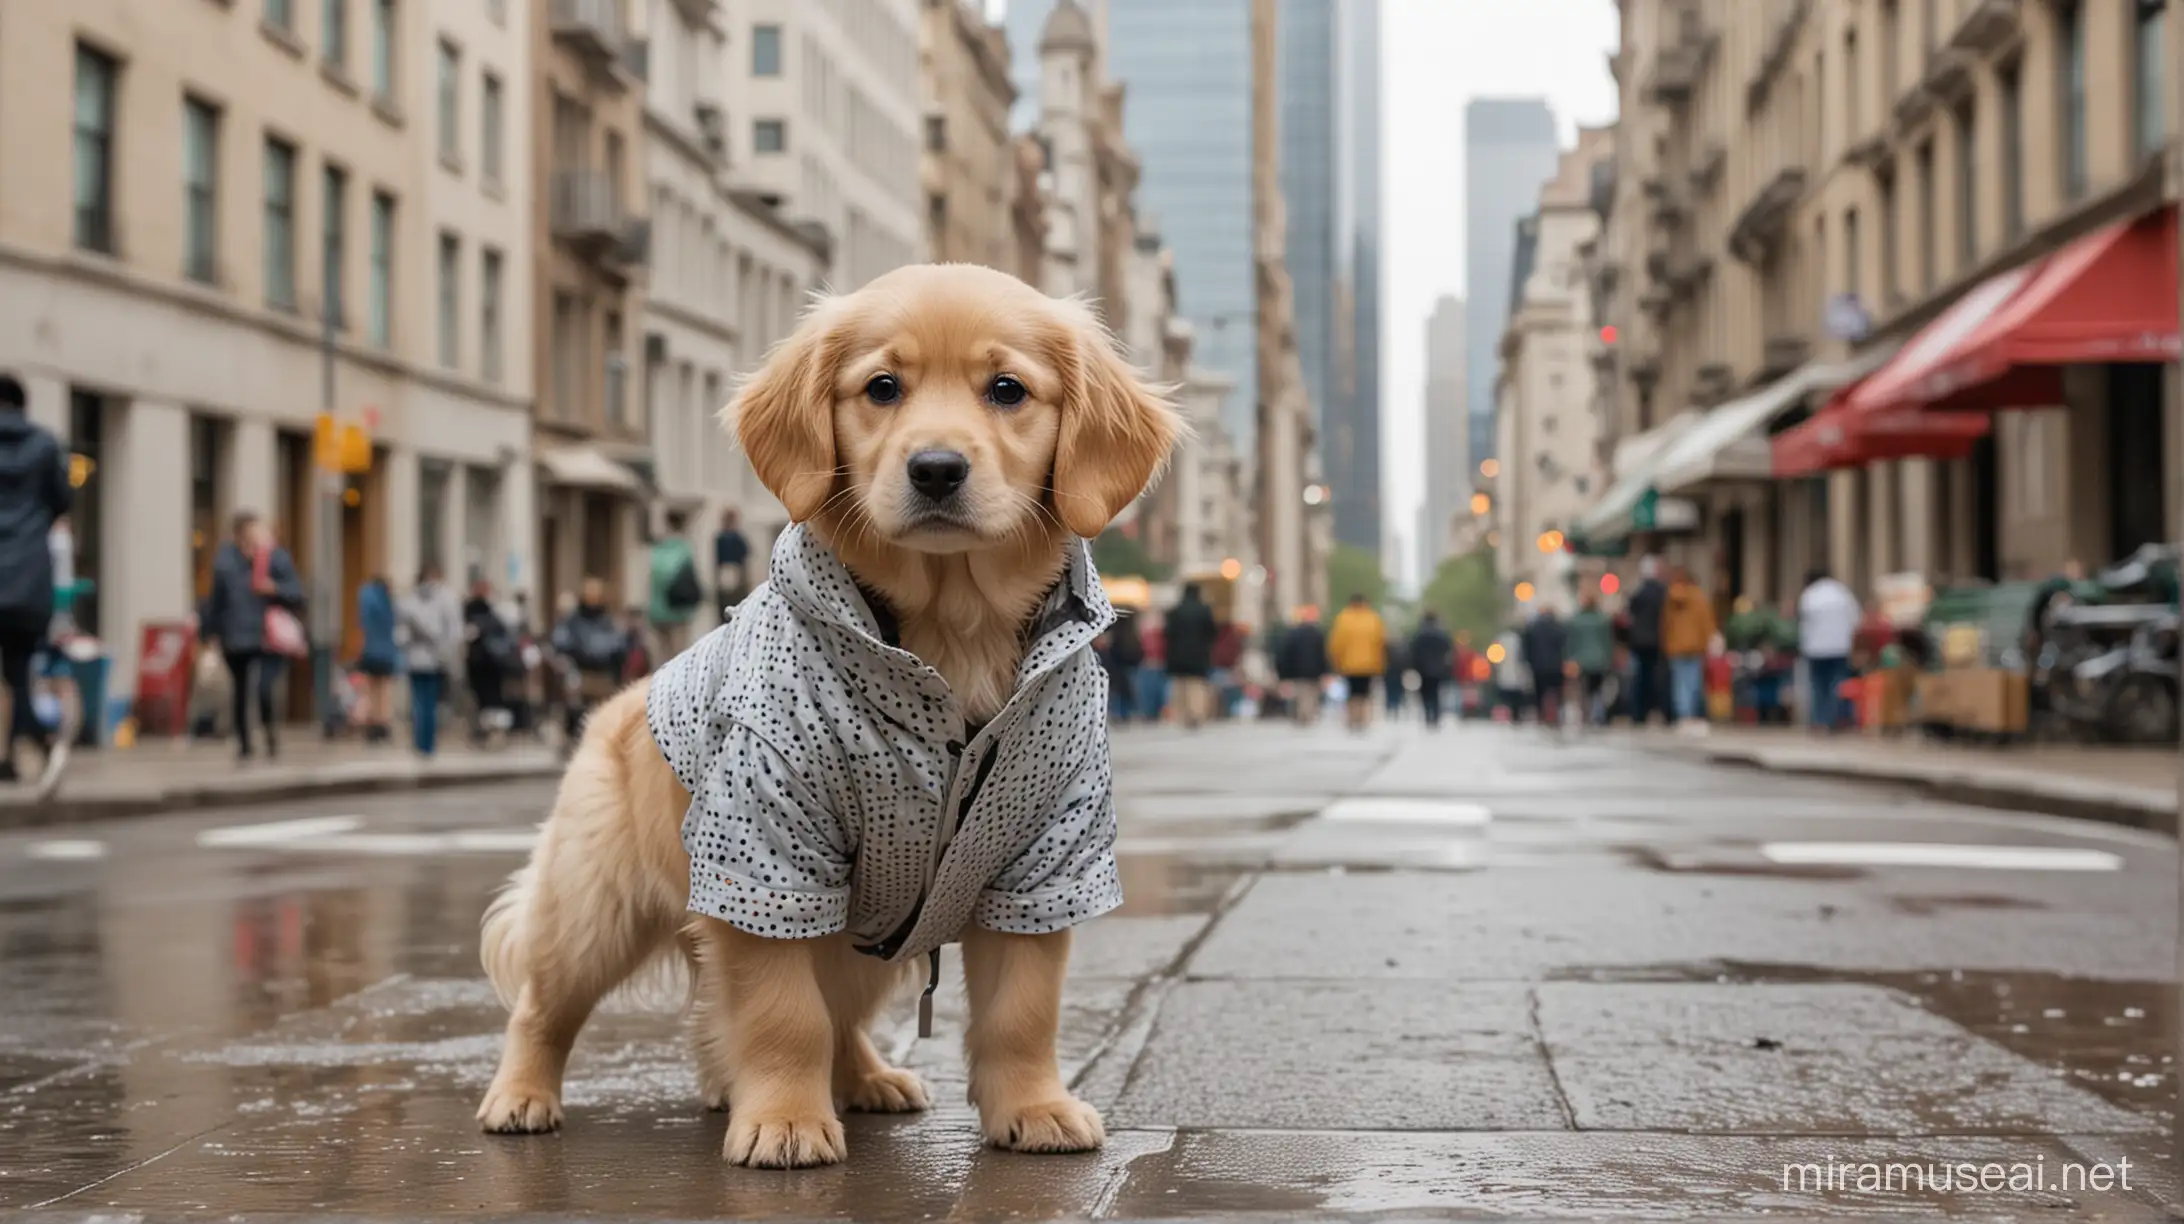 Stylish Puppy in PolkaDot Raincoat Strolling City Streets